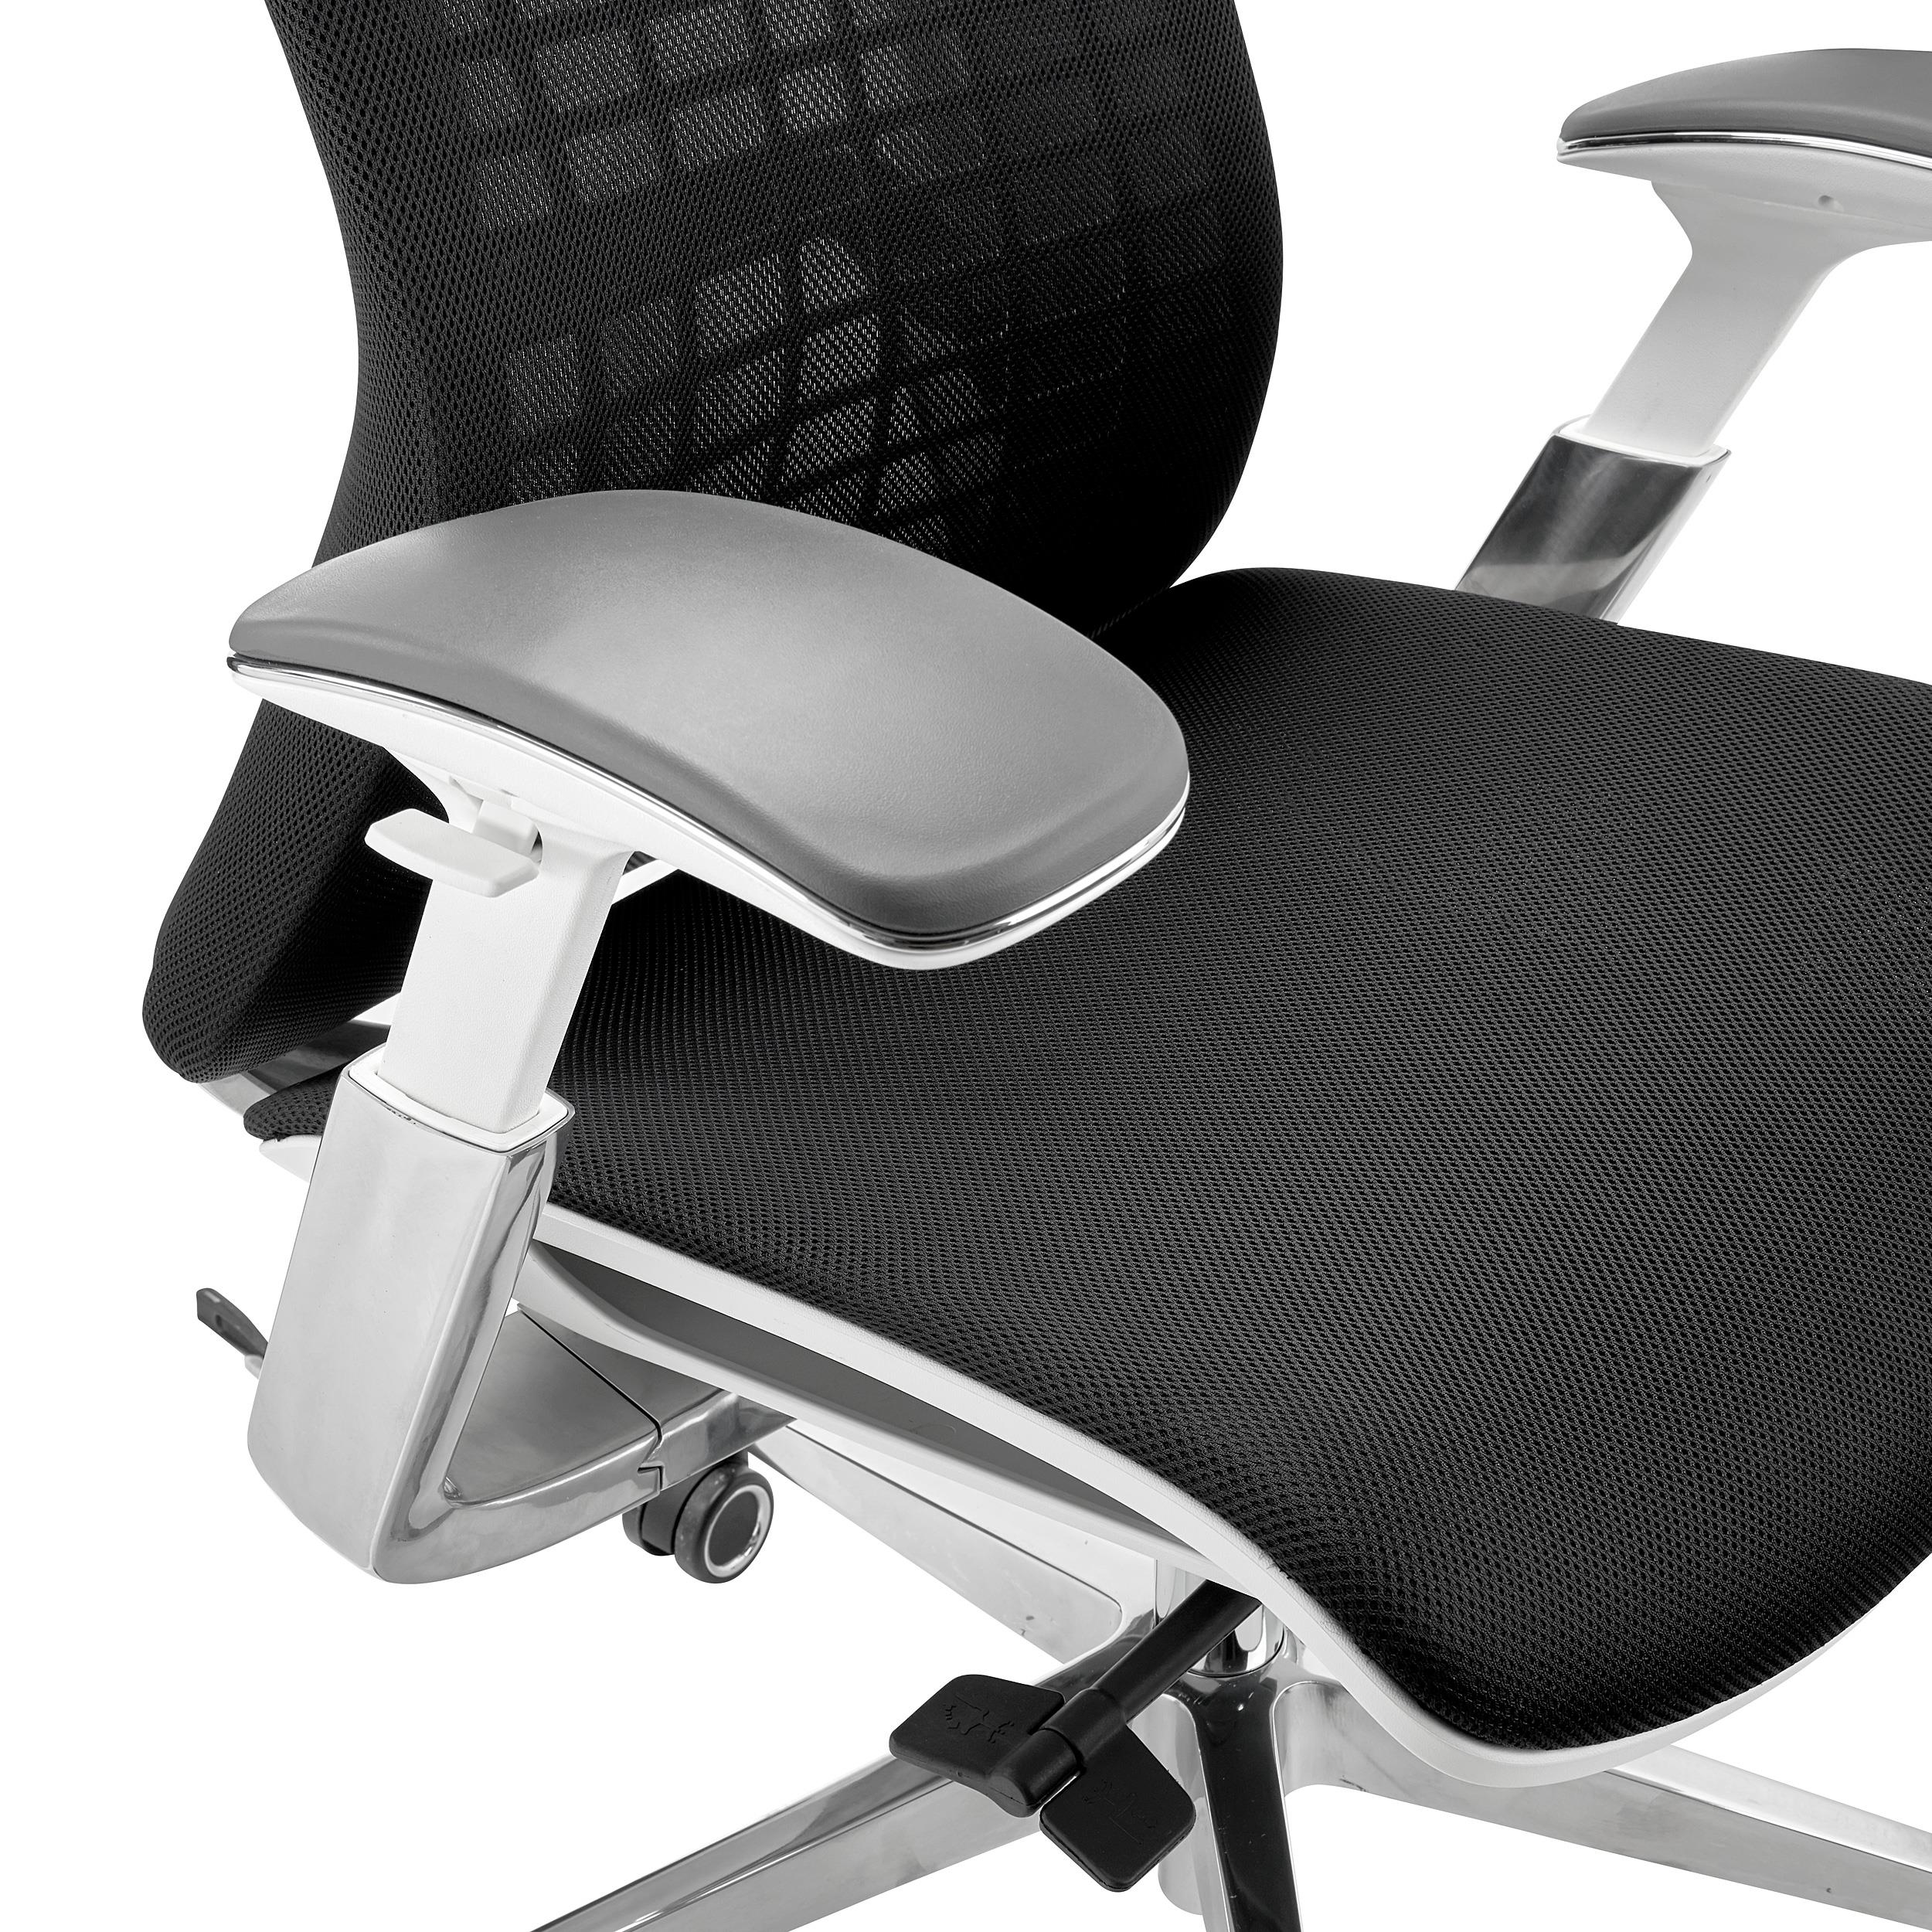 Hochwertiger Bürostuhl mit Kopfstütze Apolo 65, Farbe: Caramel / Chrom